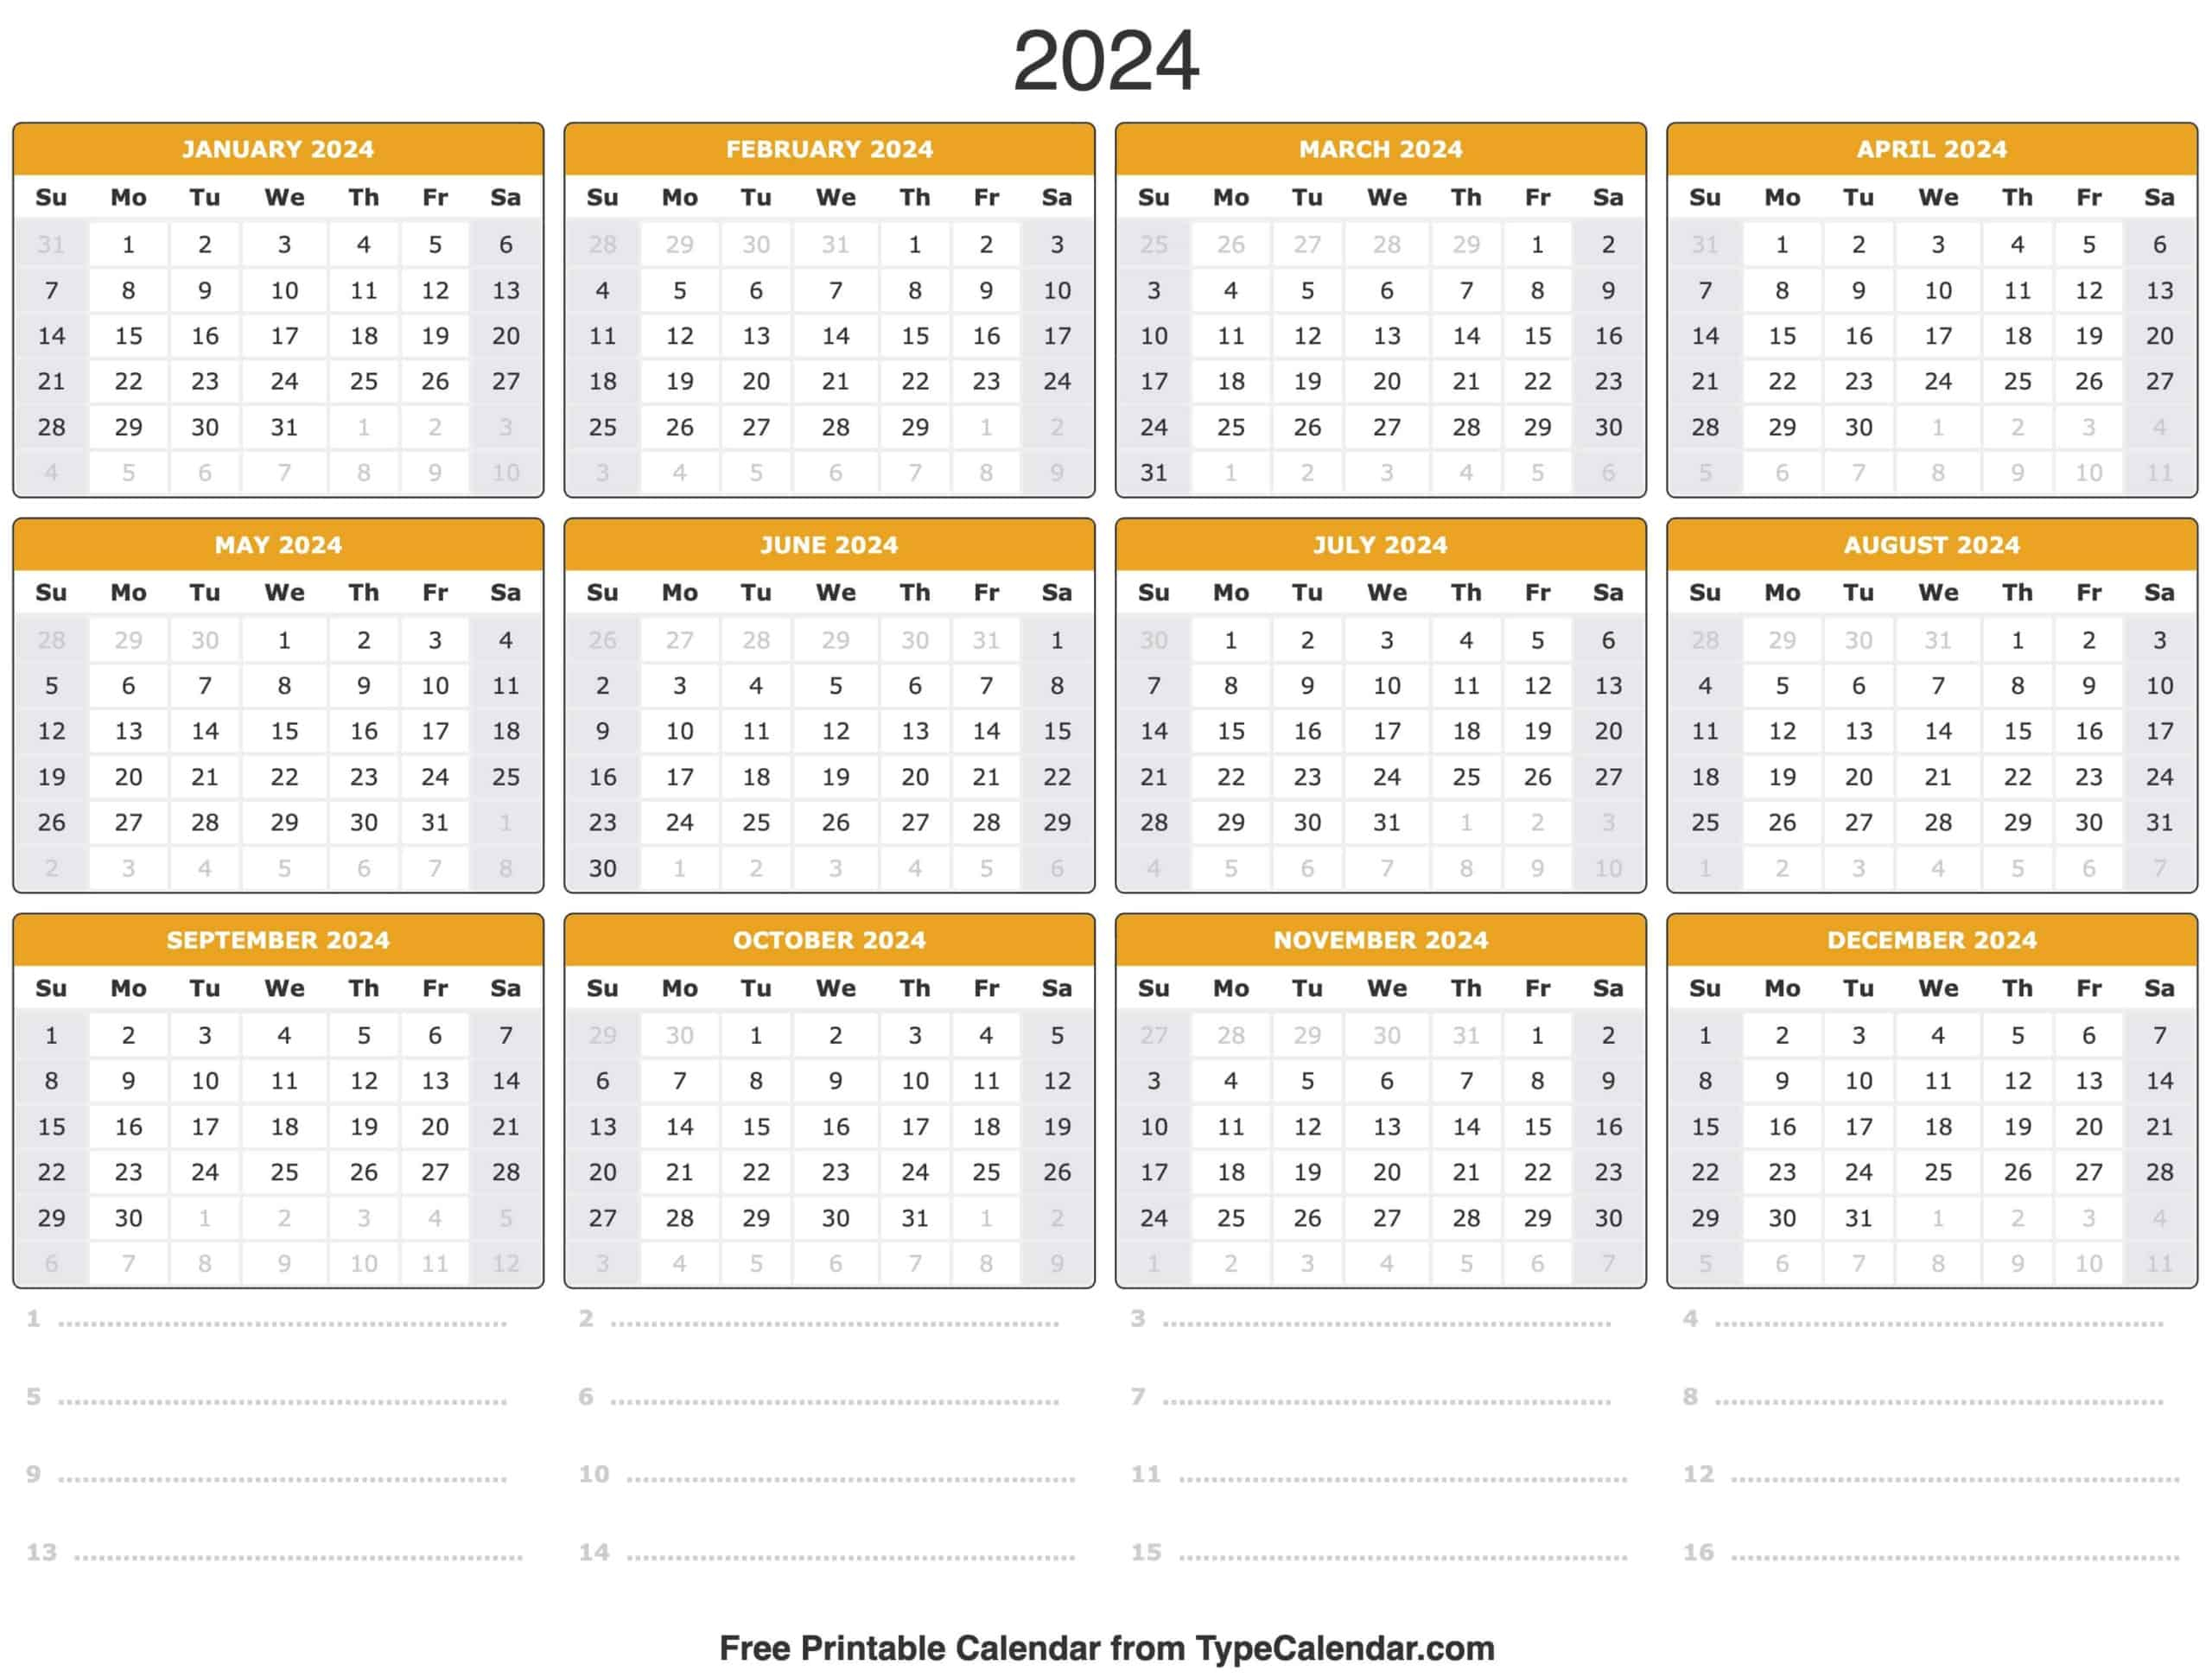 2024 Calendar: Free Printable Calendar With Holidays | 2024 Qld Calendar Printable Free